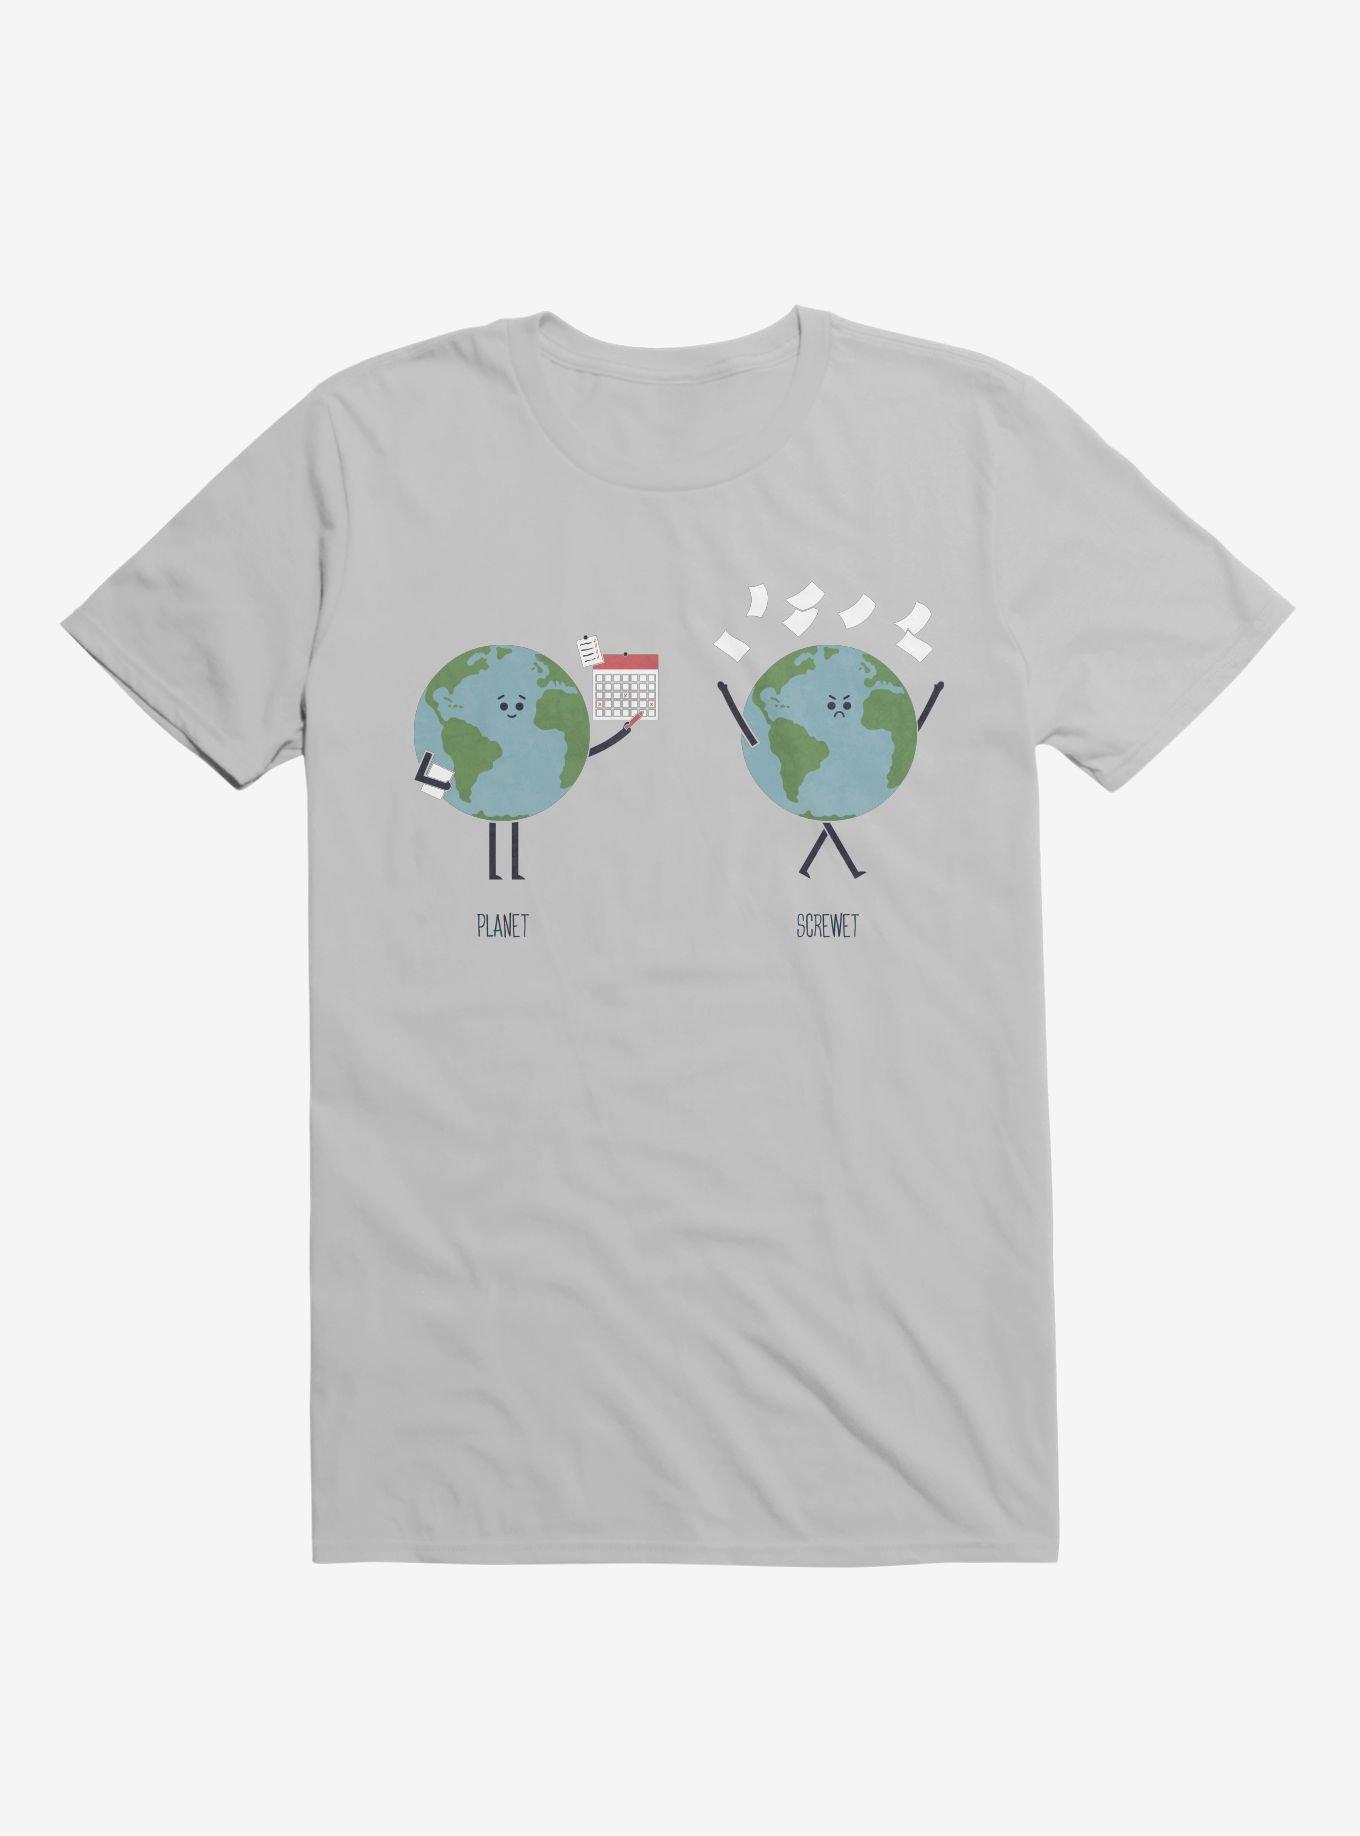 Opposites Planet Screwet Ice Grey T-Shirt